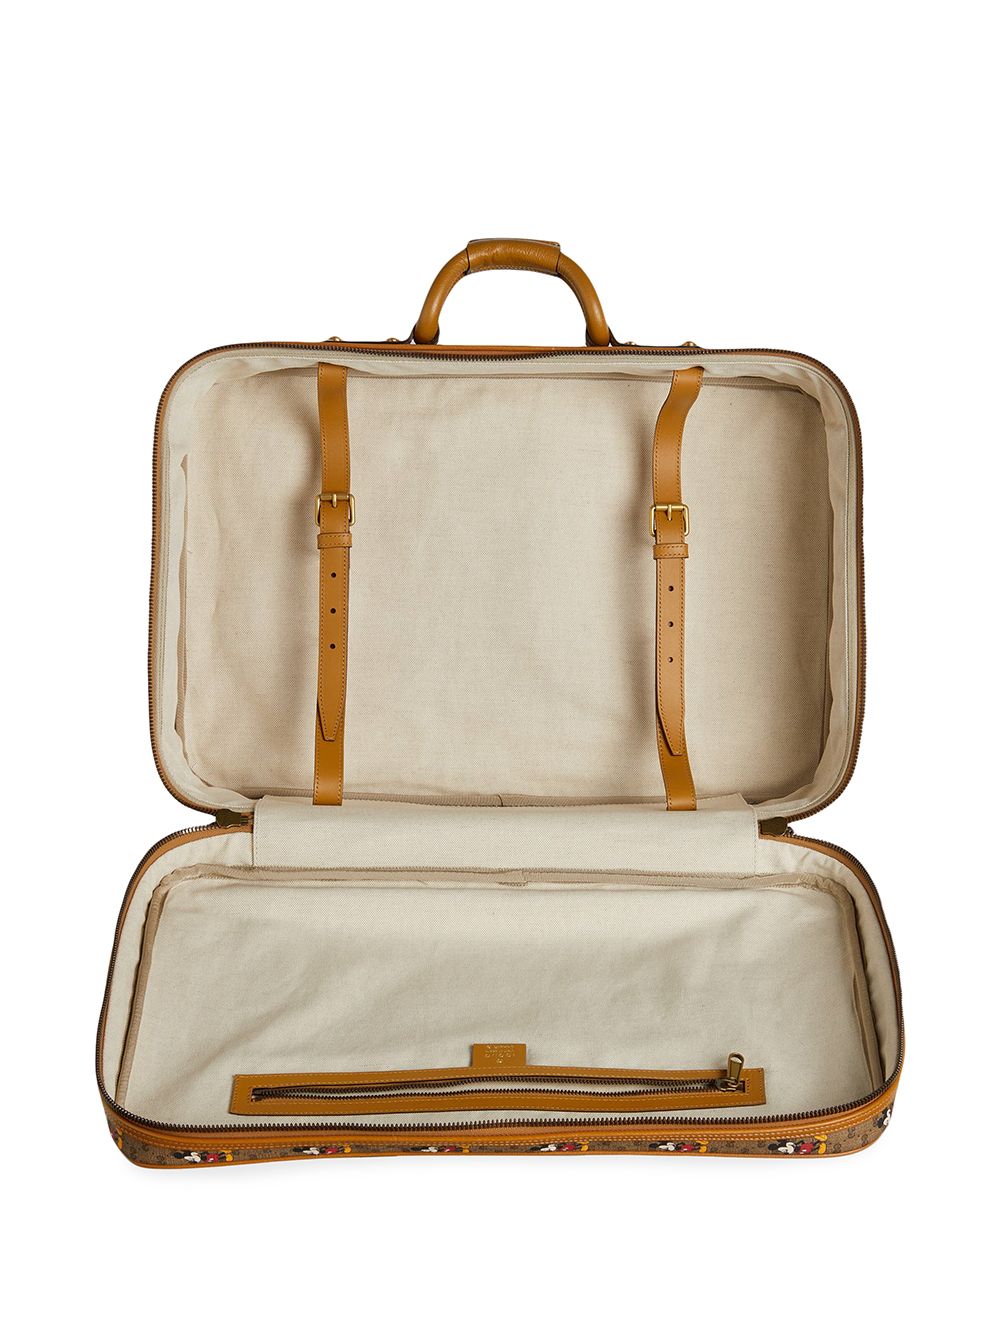 фото Gucci чемодан с узором gg из коллаборации с disney